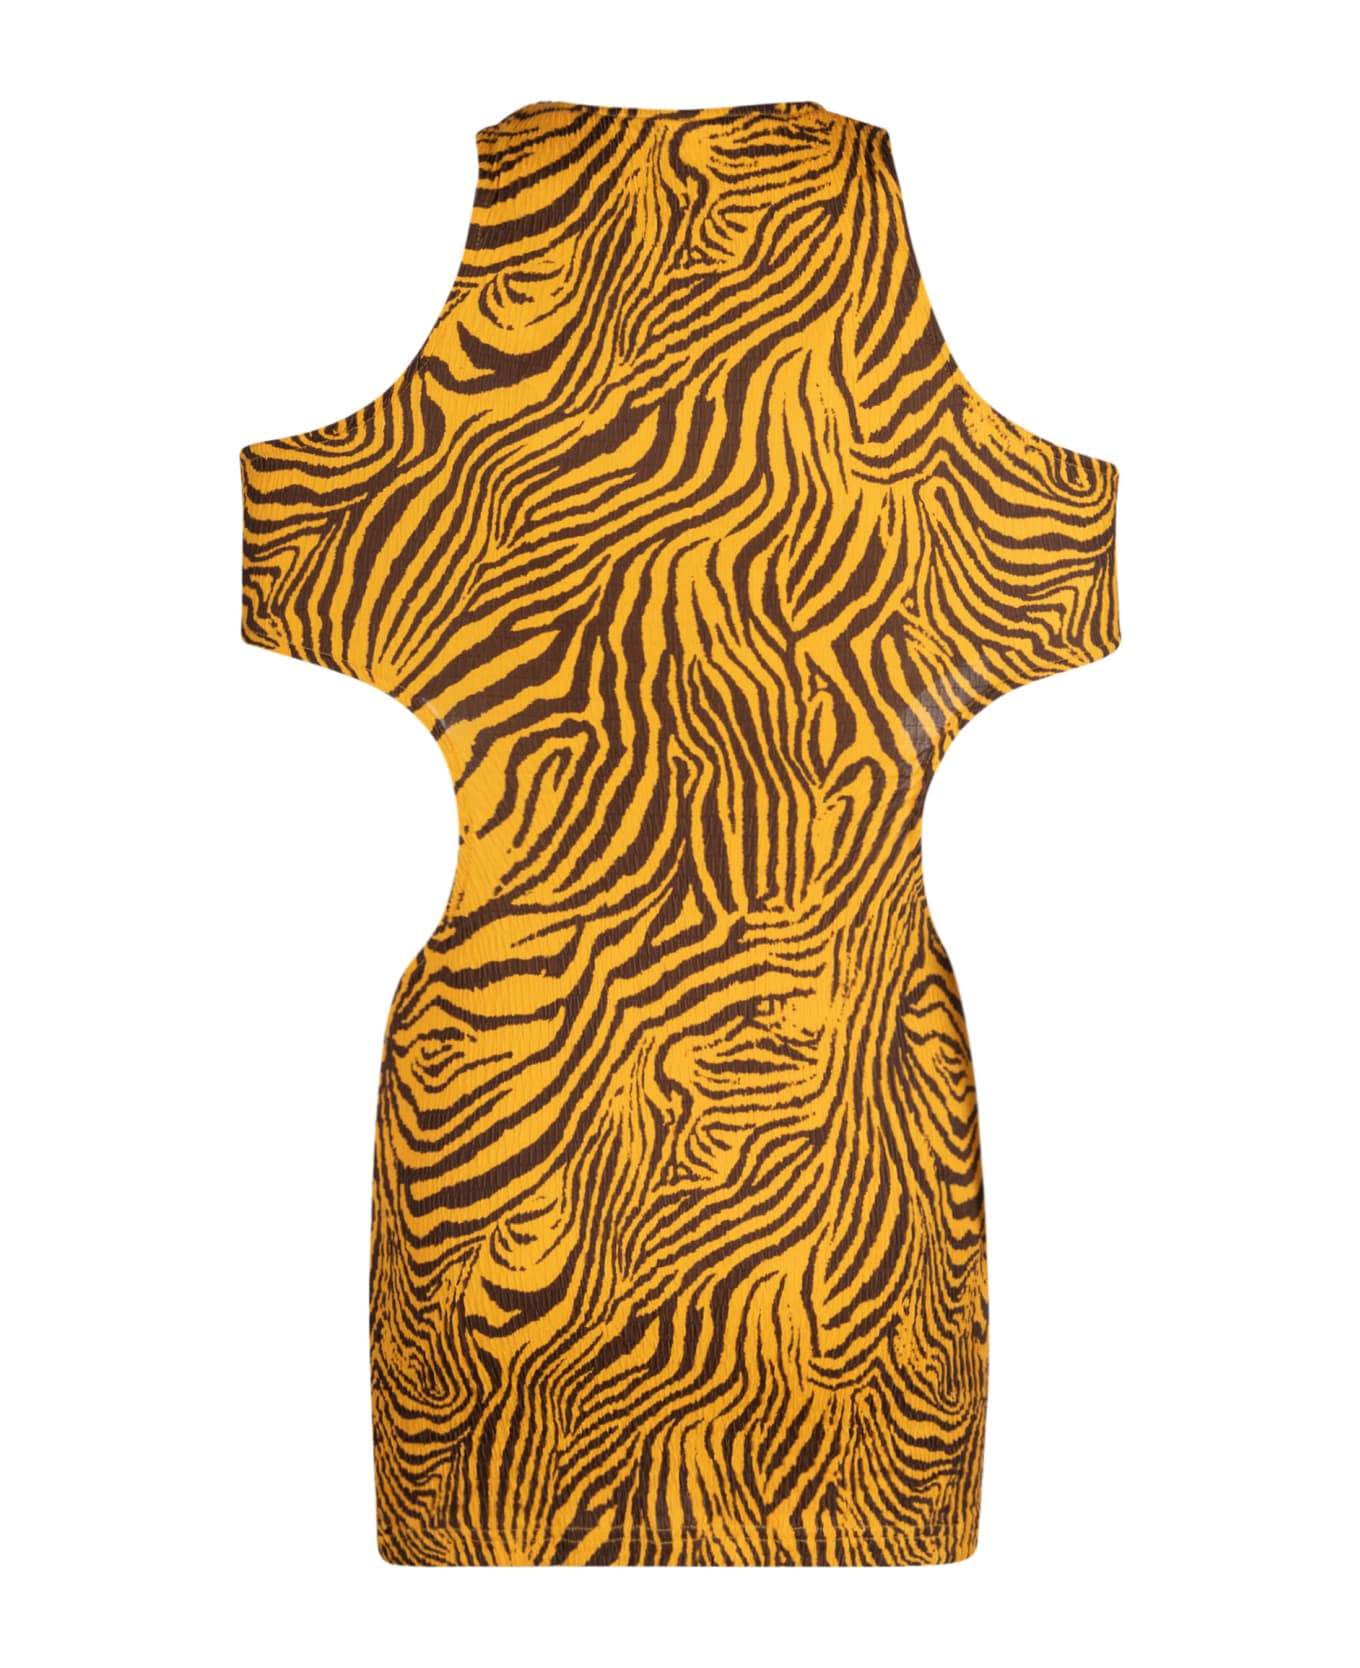 Reina Olga Tiger Print Dress - Tiger Seersucker